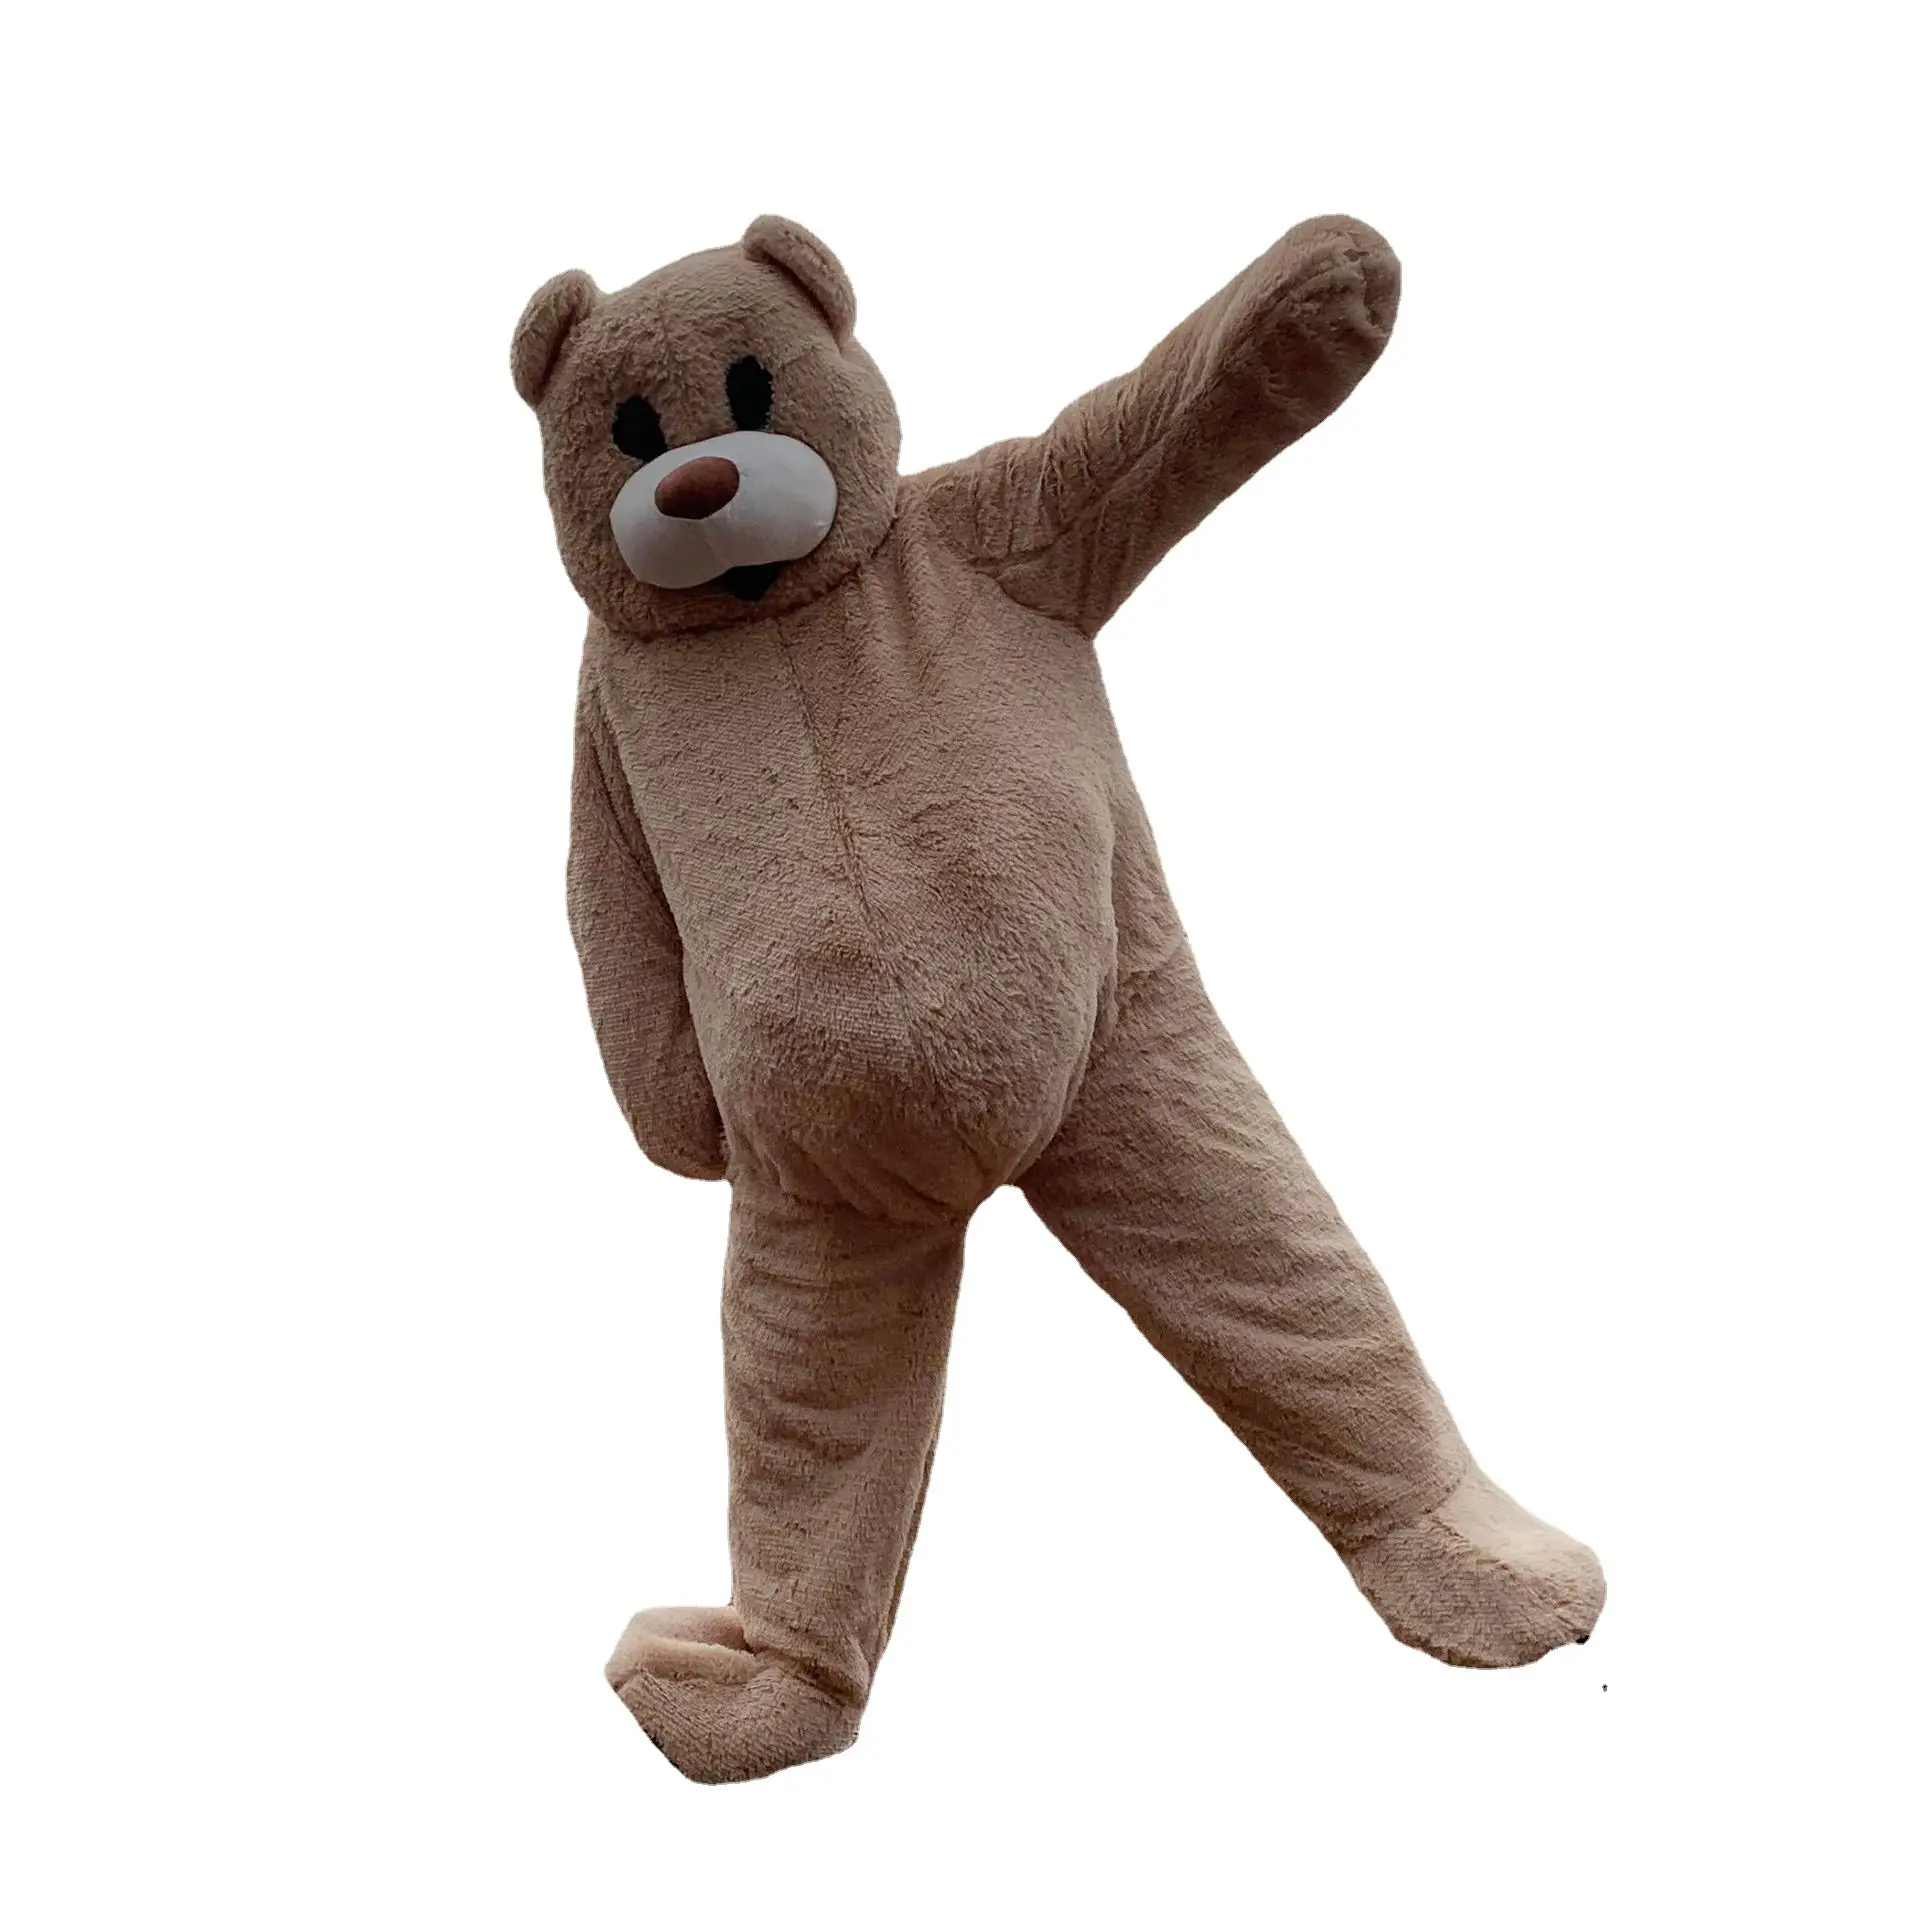 आलीशान गुड़िया शुभंकर कपड़े भालू कस्टम निर्माता शुद्ध लाल टेडी भालू नृत्य भालू